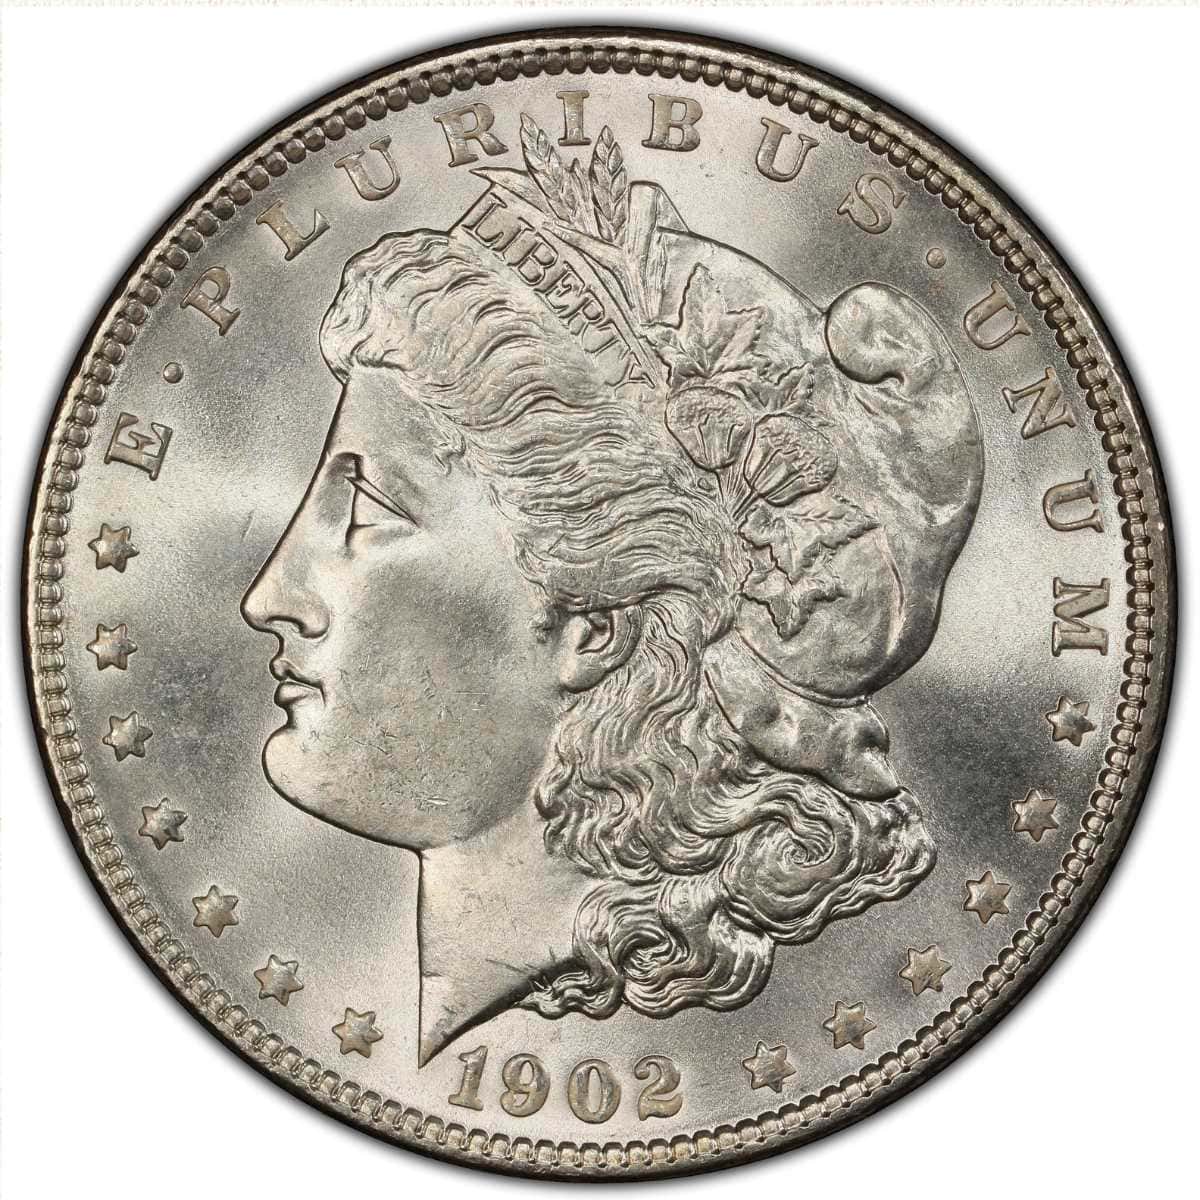 1902 Silver Dollar background